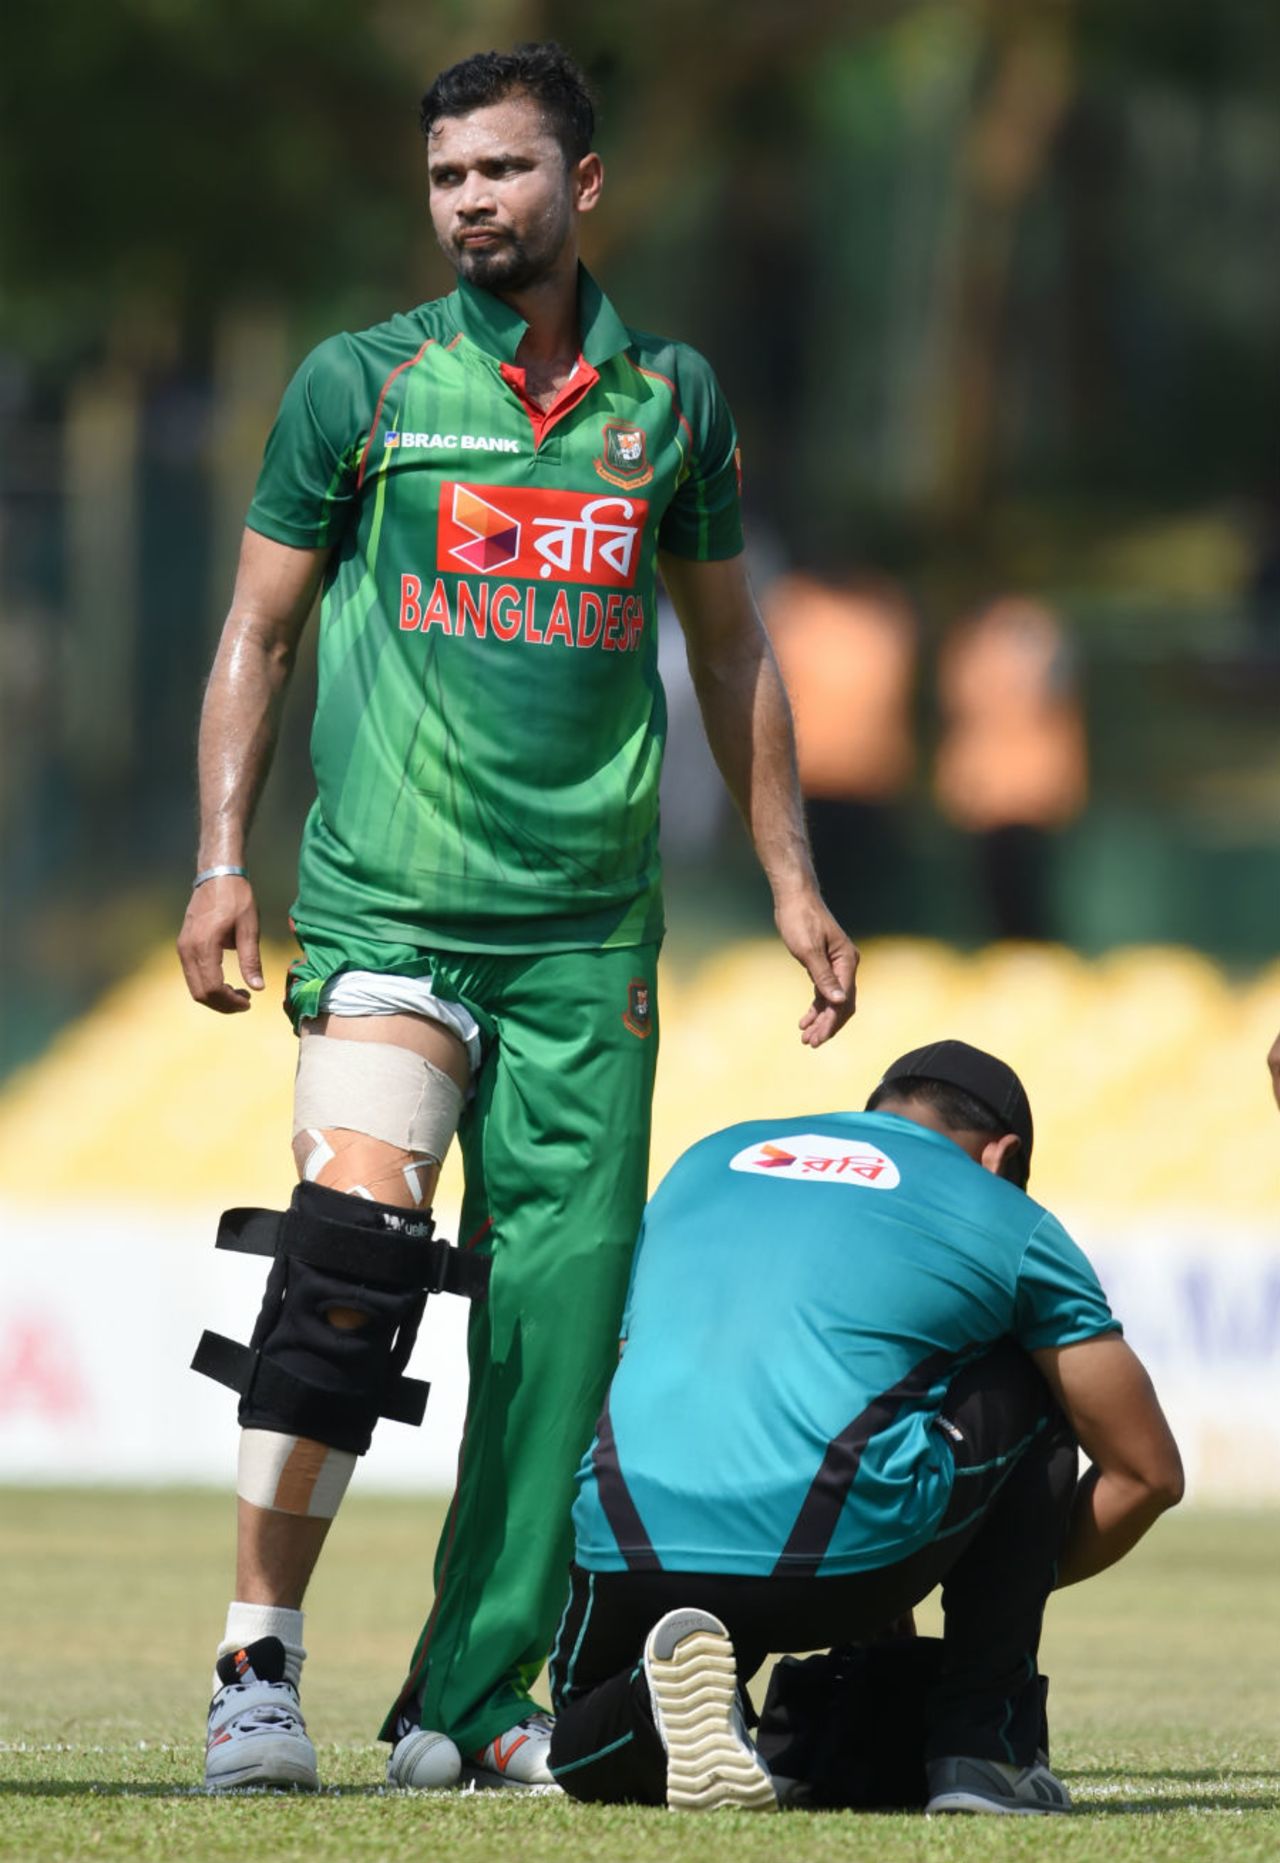 Mashrafe Mortaza gets attention from the physio after damaging his knee brace, Sri Lanka v Bangladesh, 2nd ODI, Dambulla, March 28, 2017